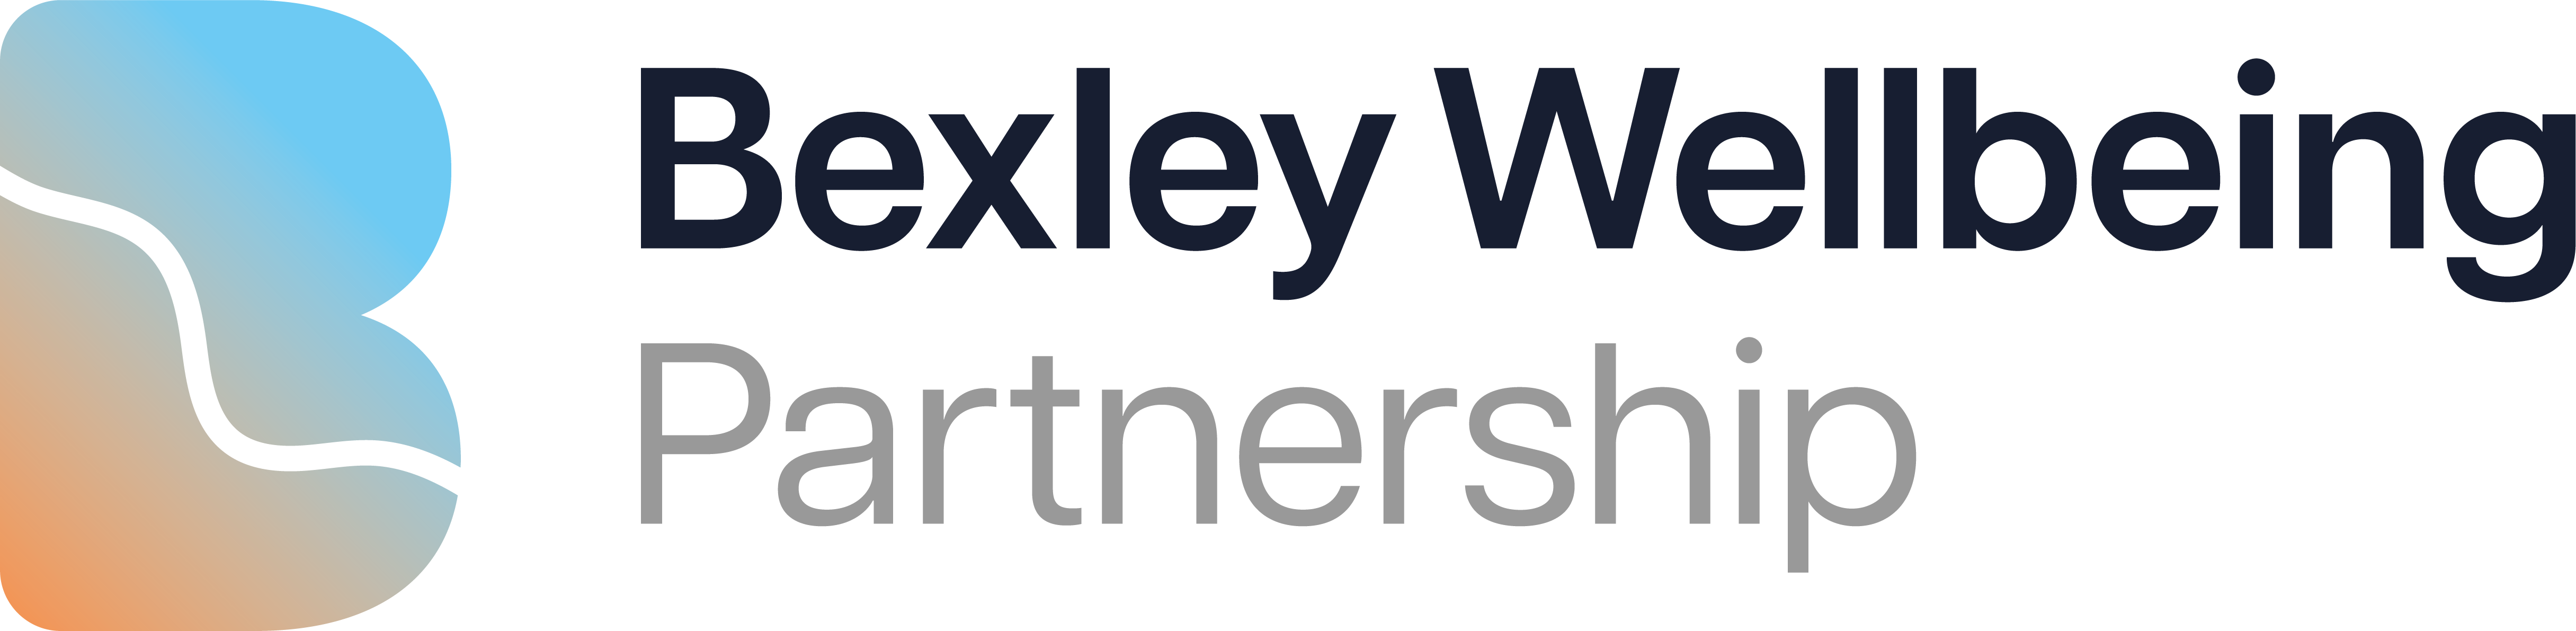 Bexley Wellbeing Partnership